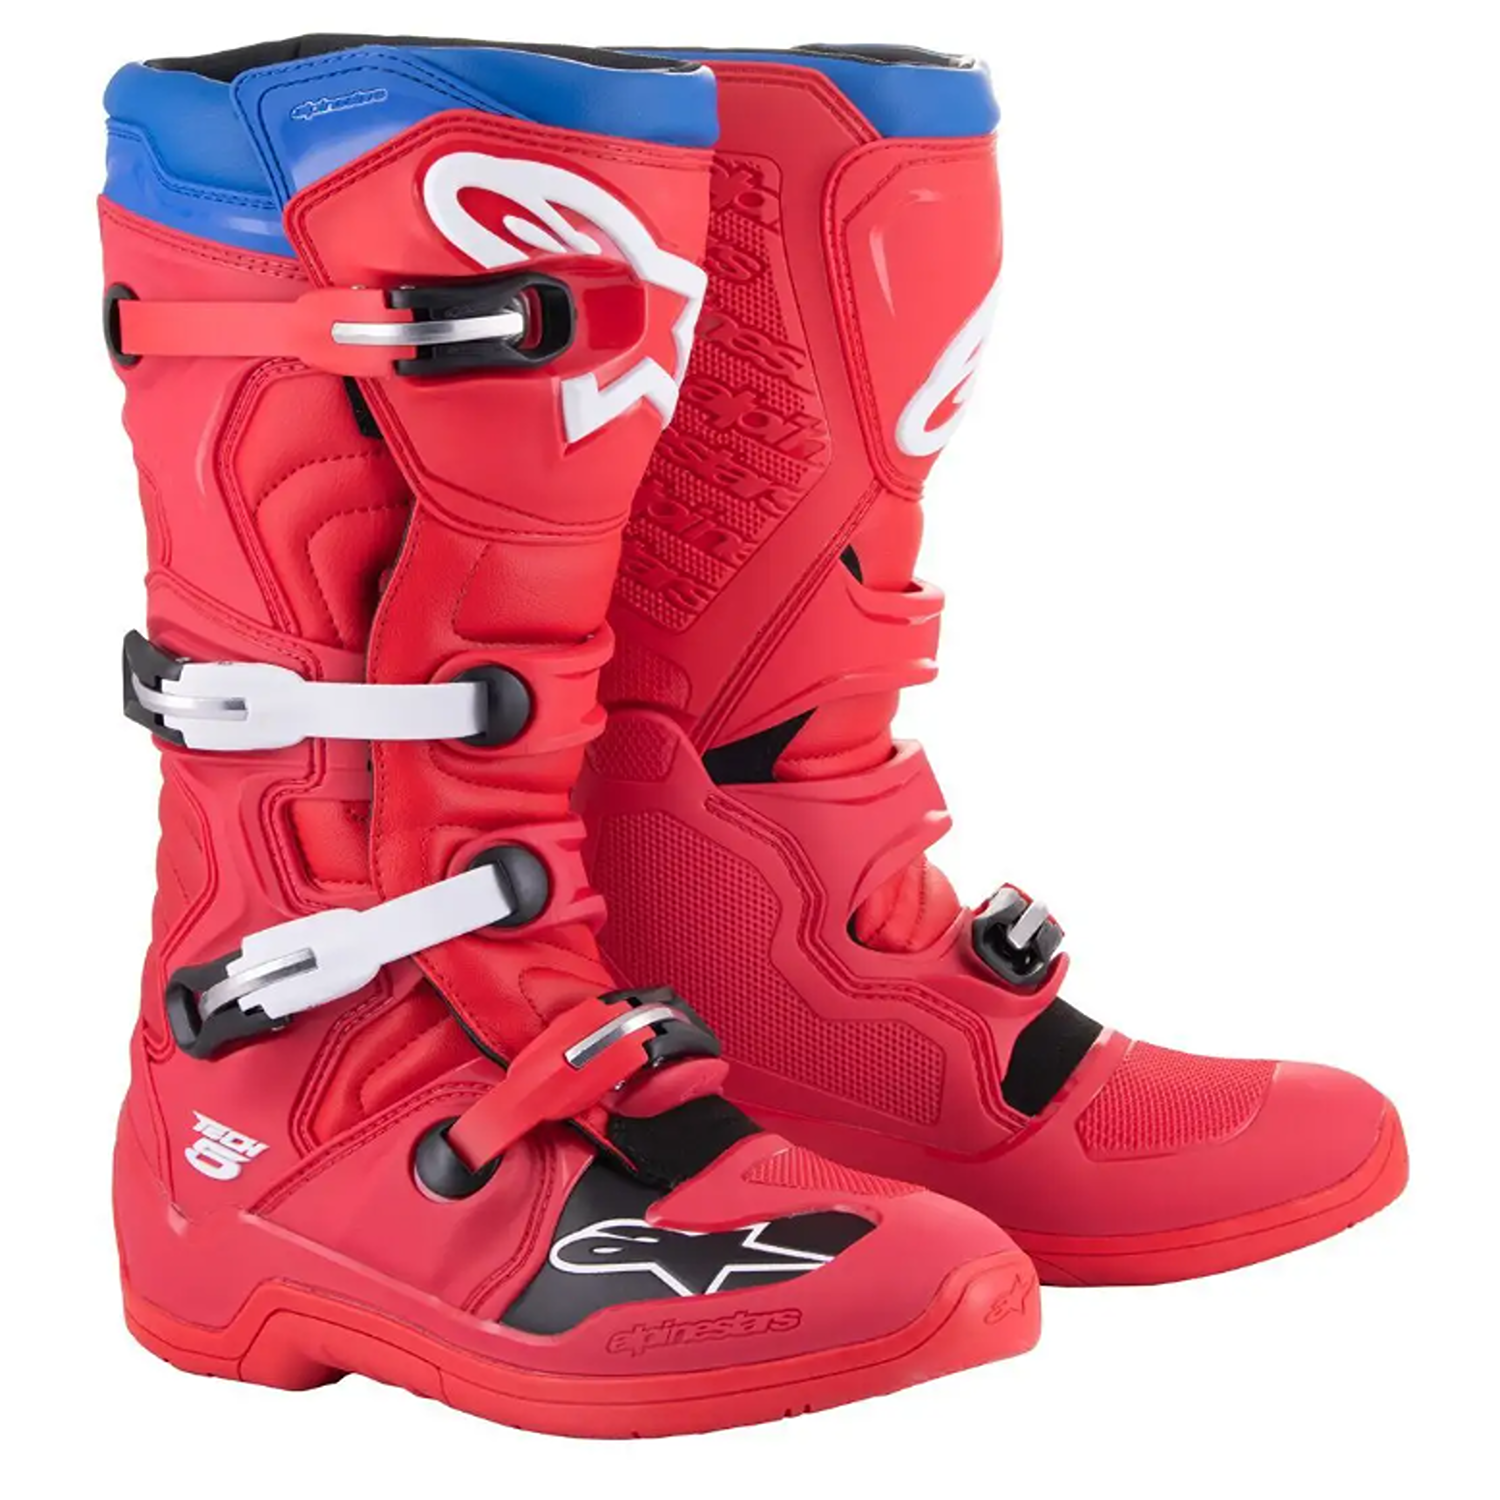 Image of Alpinestars Tech 5 Boots Bright Red Dark Red Blue Size US 14 EN